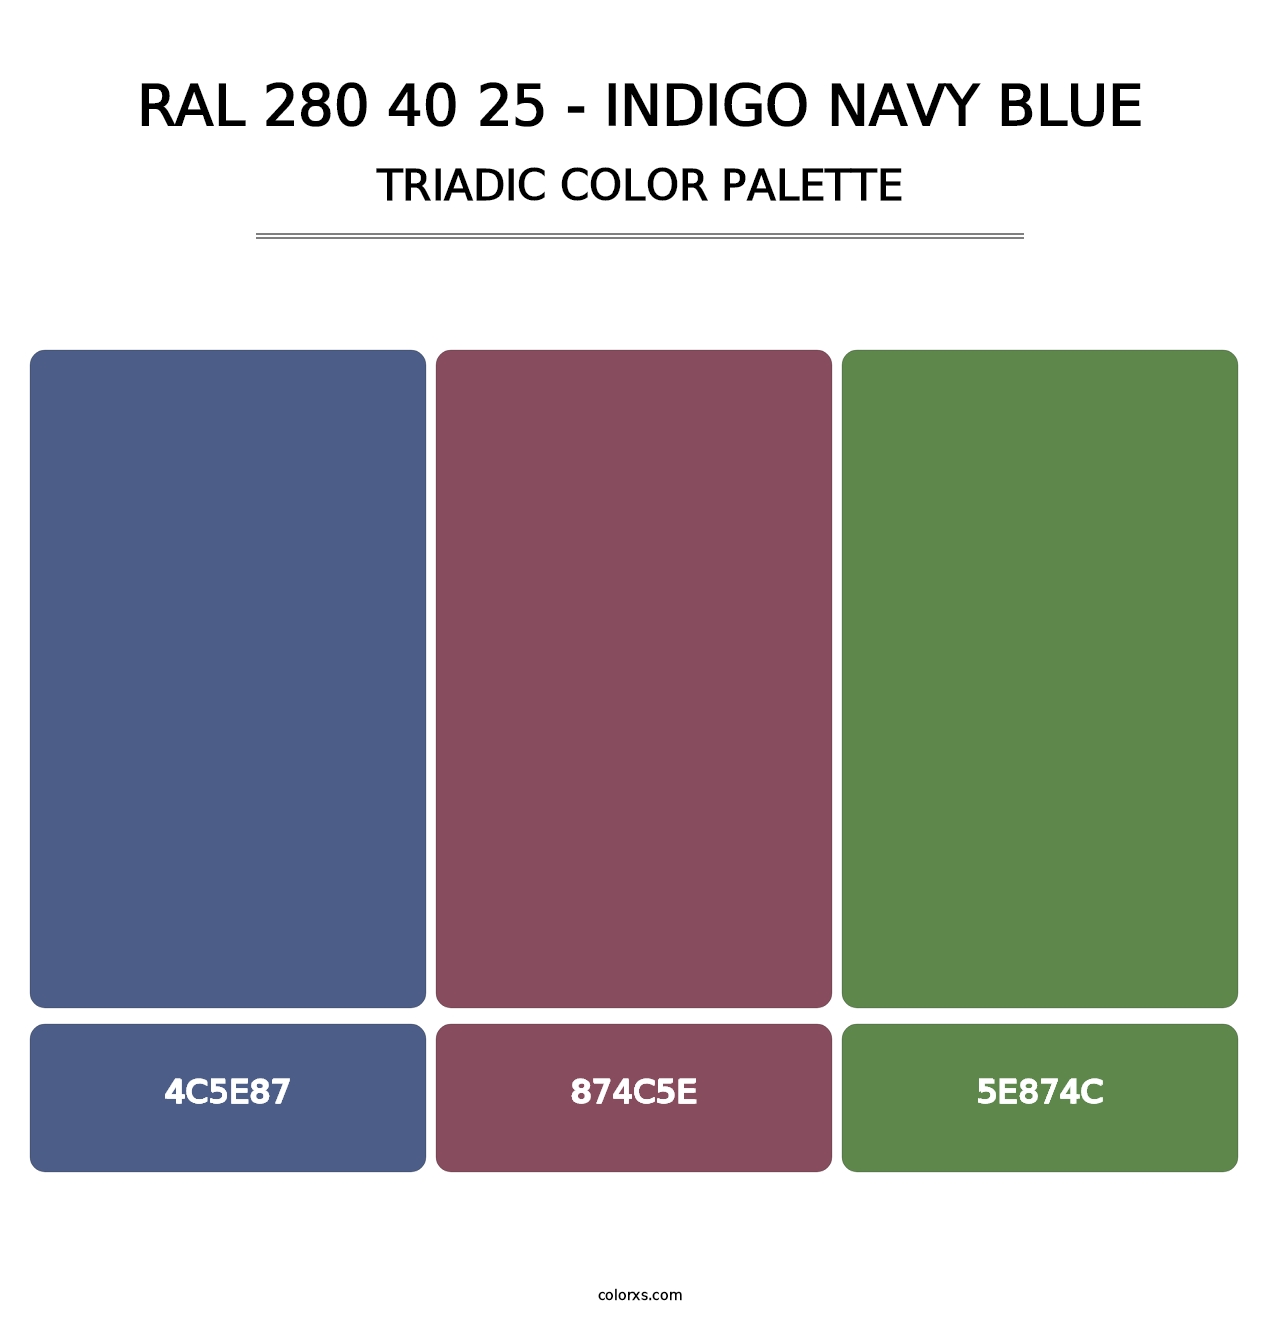 RAL 280 40 25 - Indigo Navy Blue - Triadic Color Palette